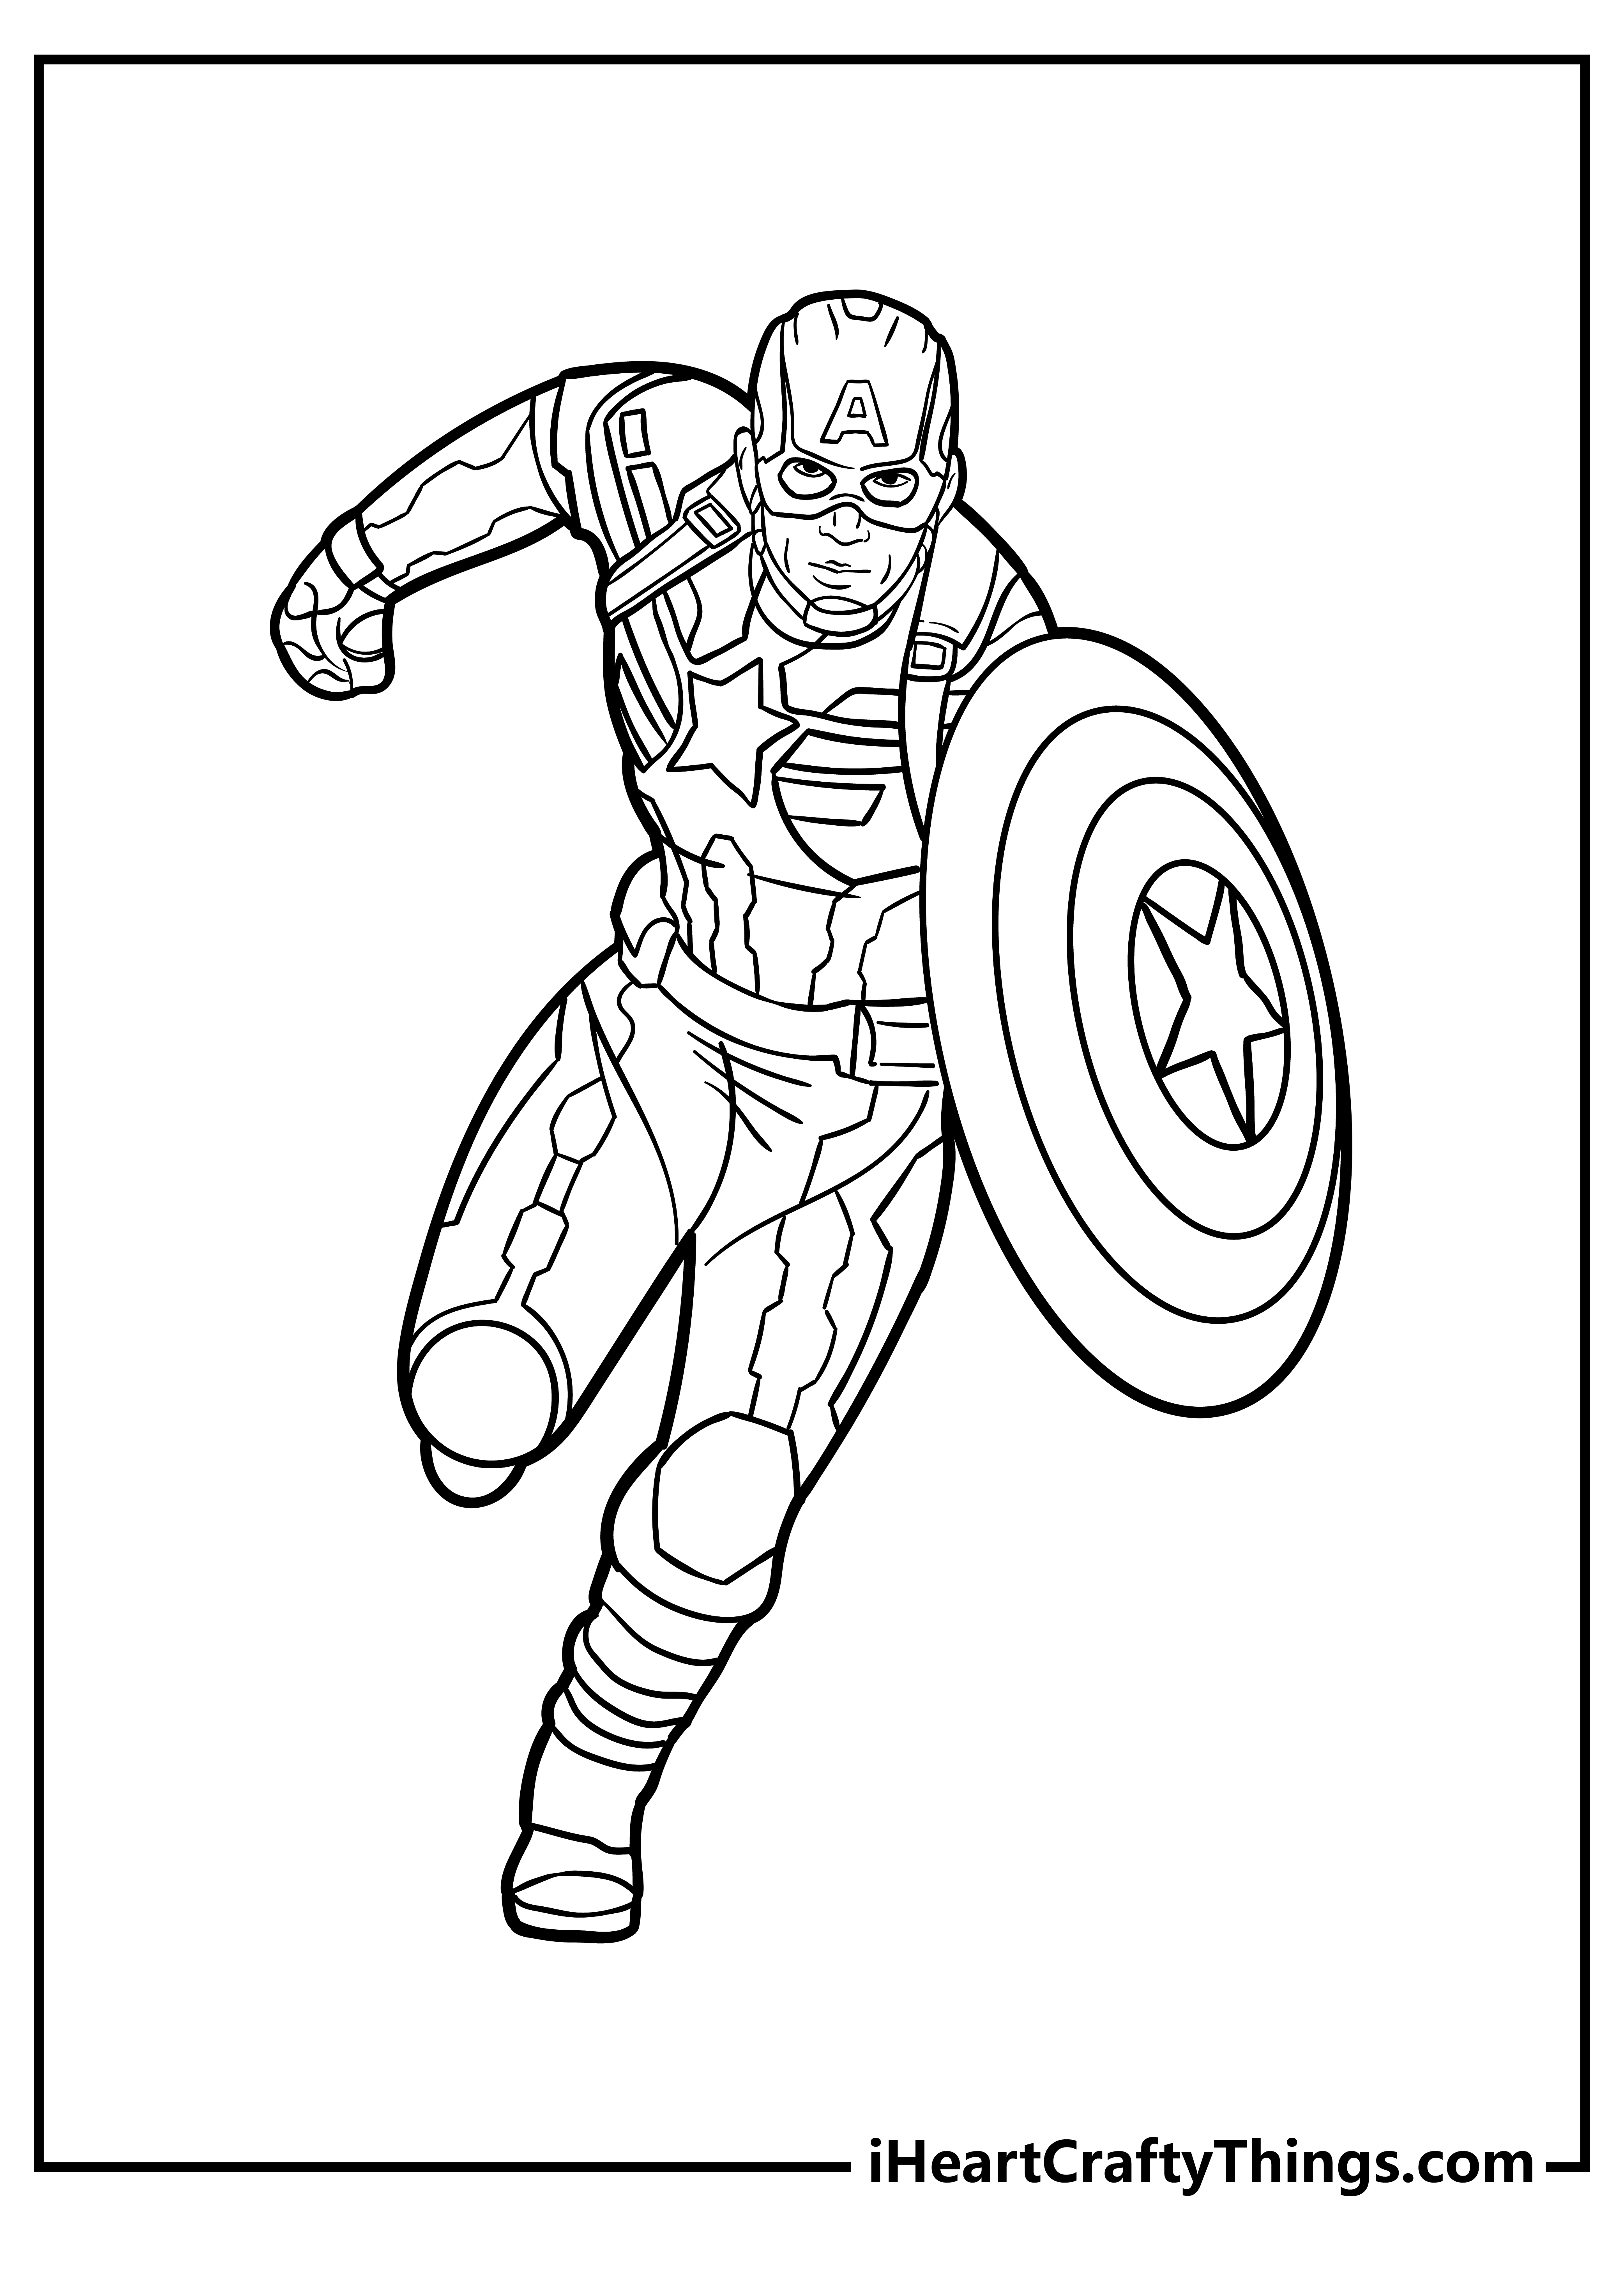 Captain America Coloring Original Sheet for children free download